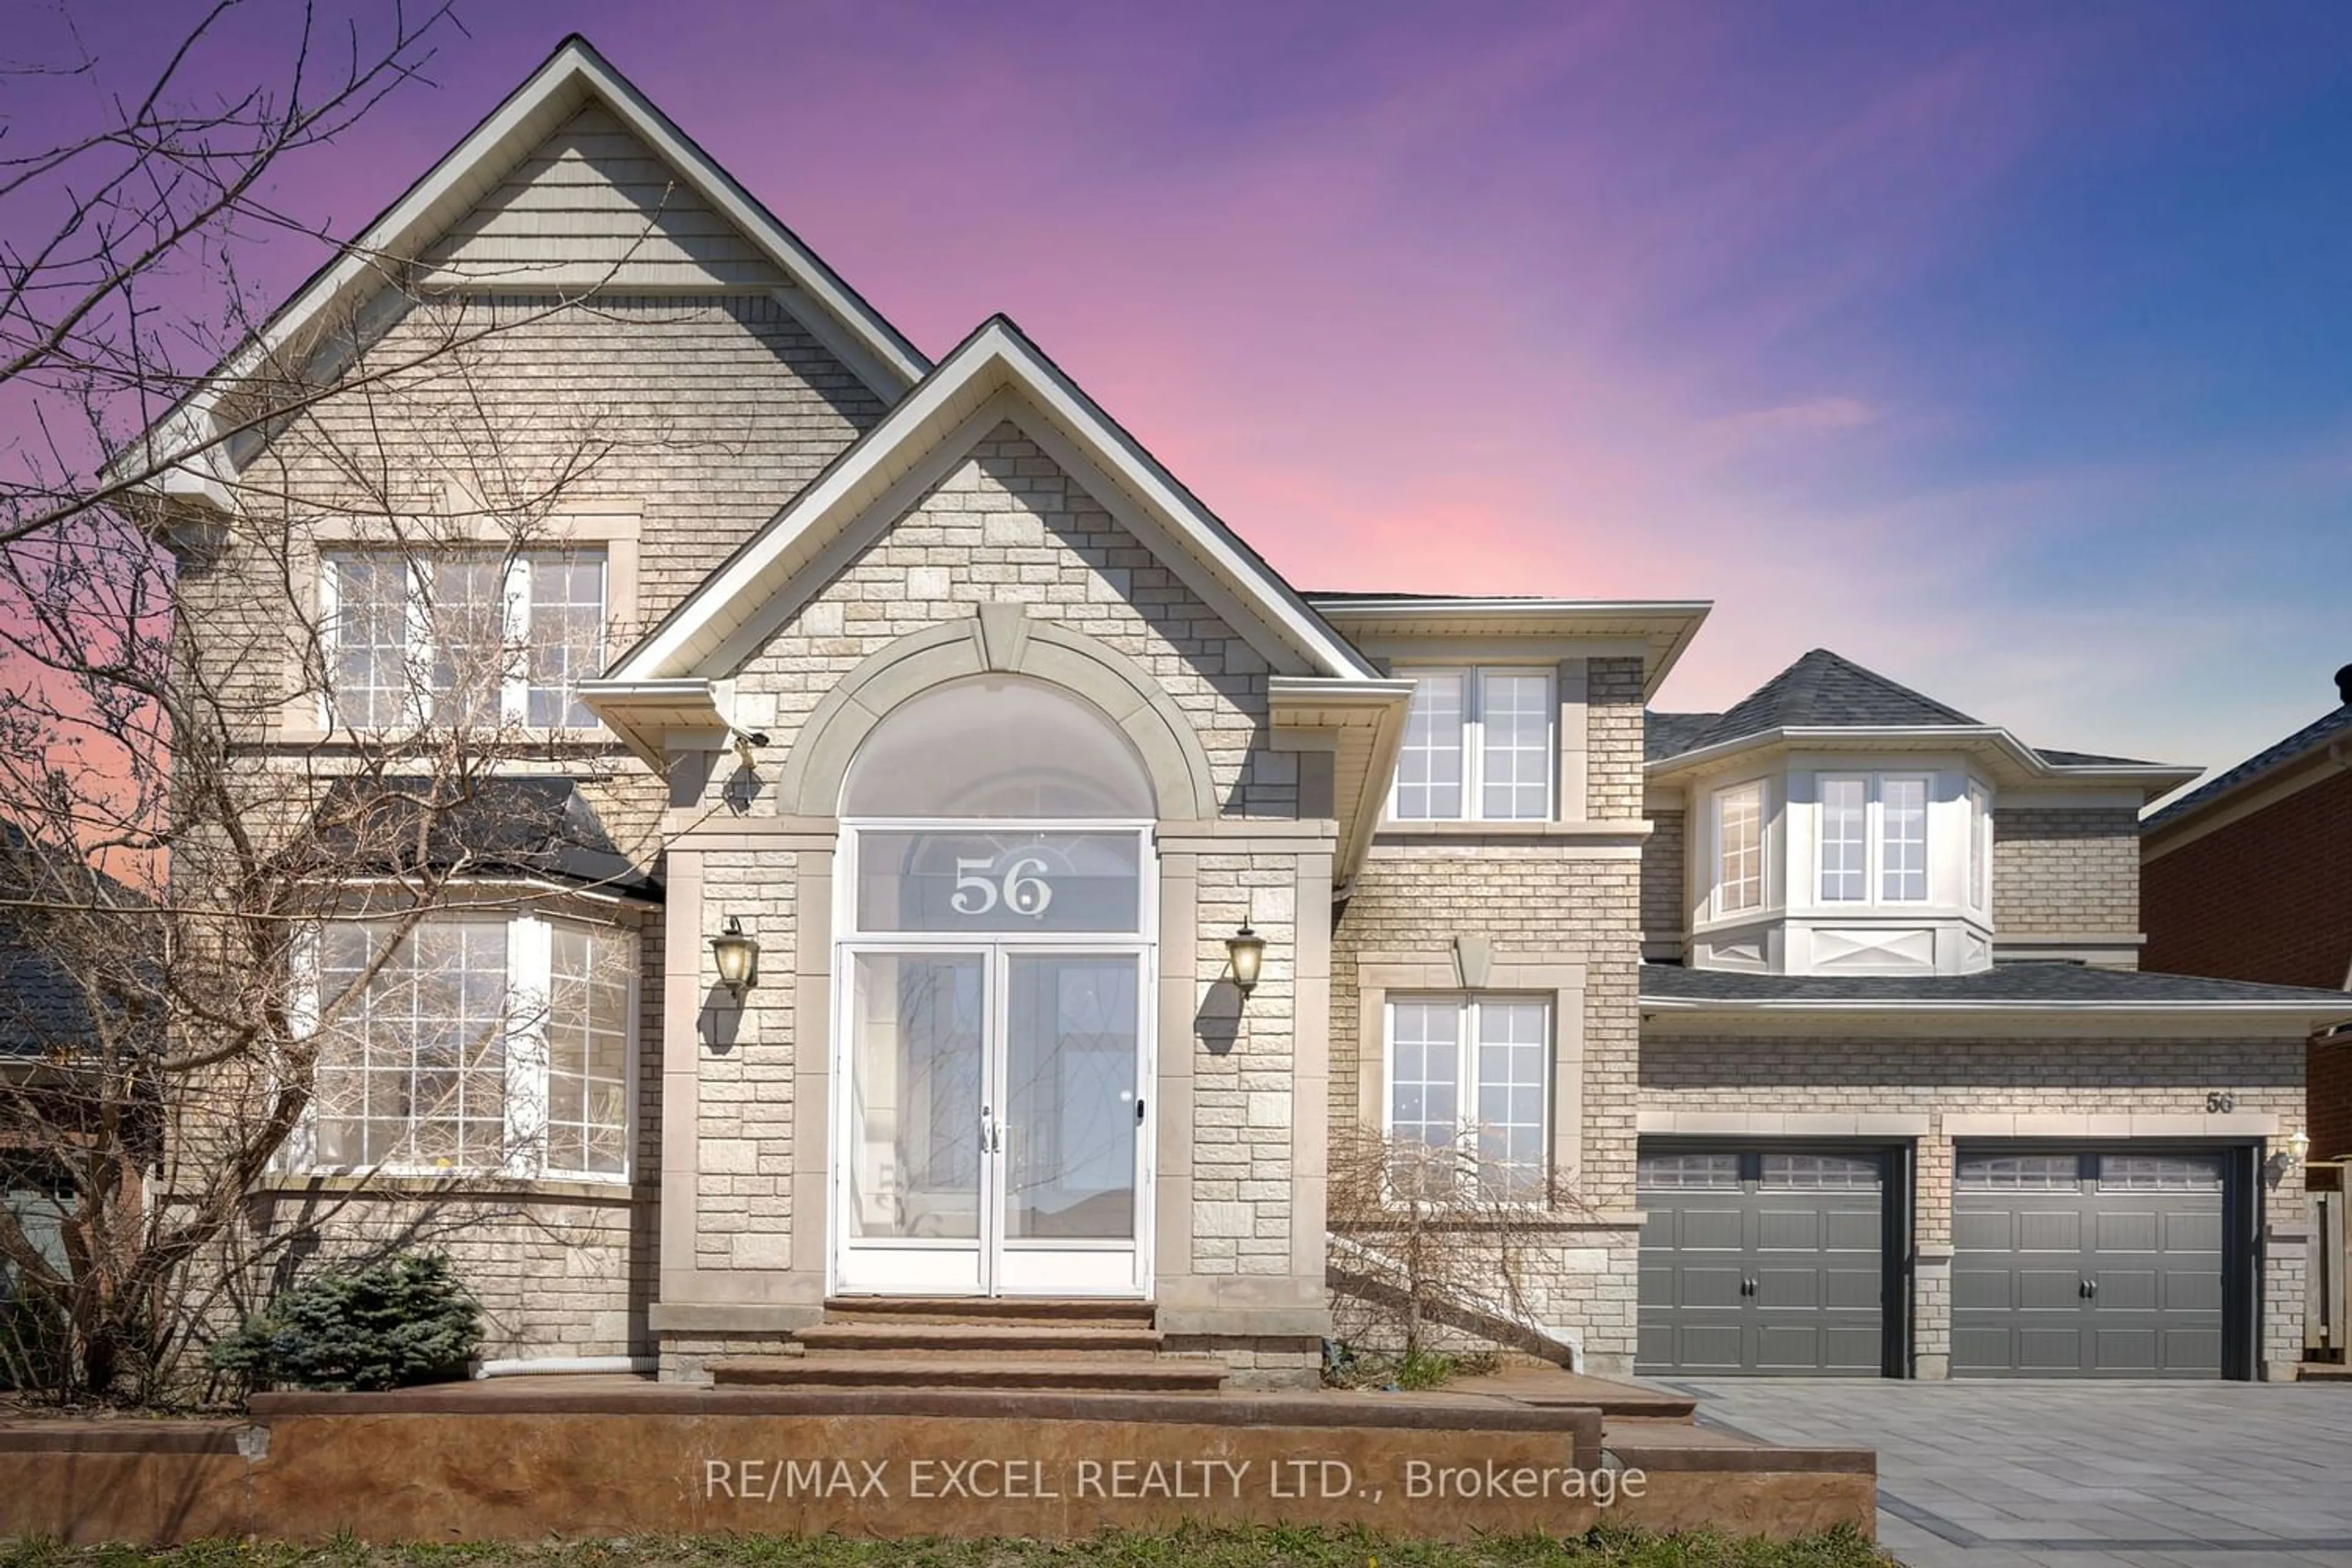 Home with brick exterior material for 56 Castlemore Ave, Markham Ontario L6C 2G2